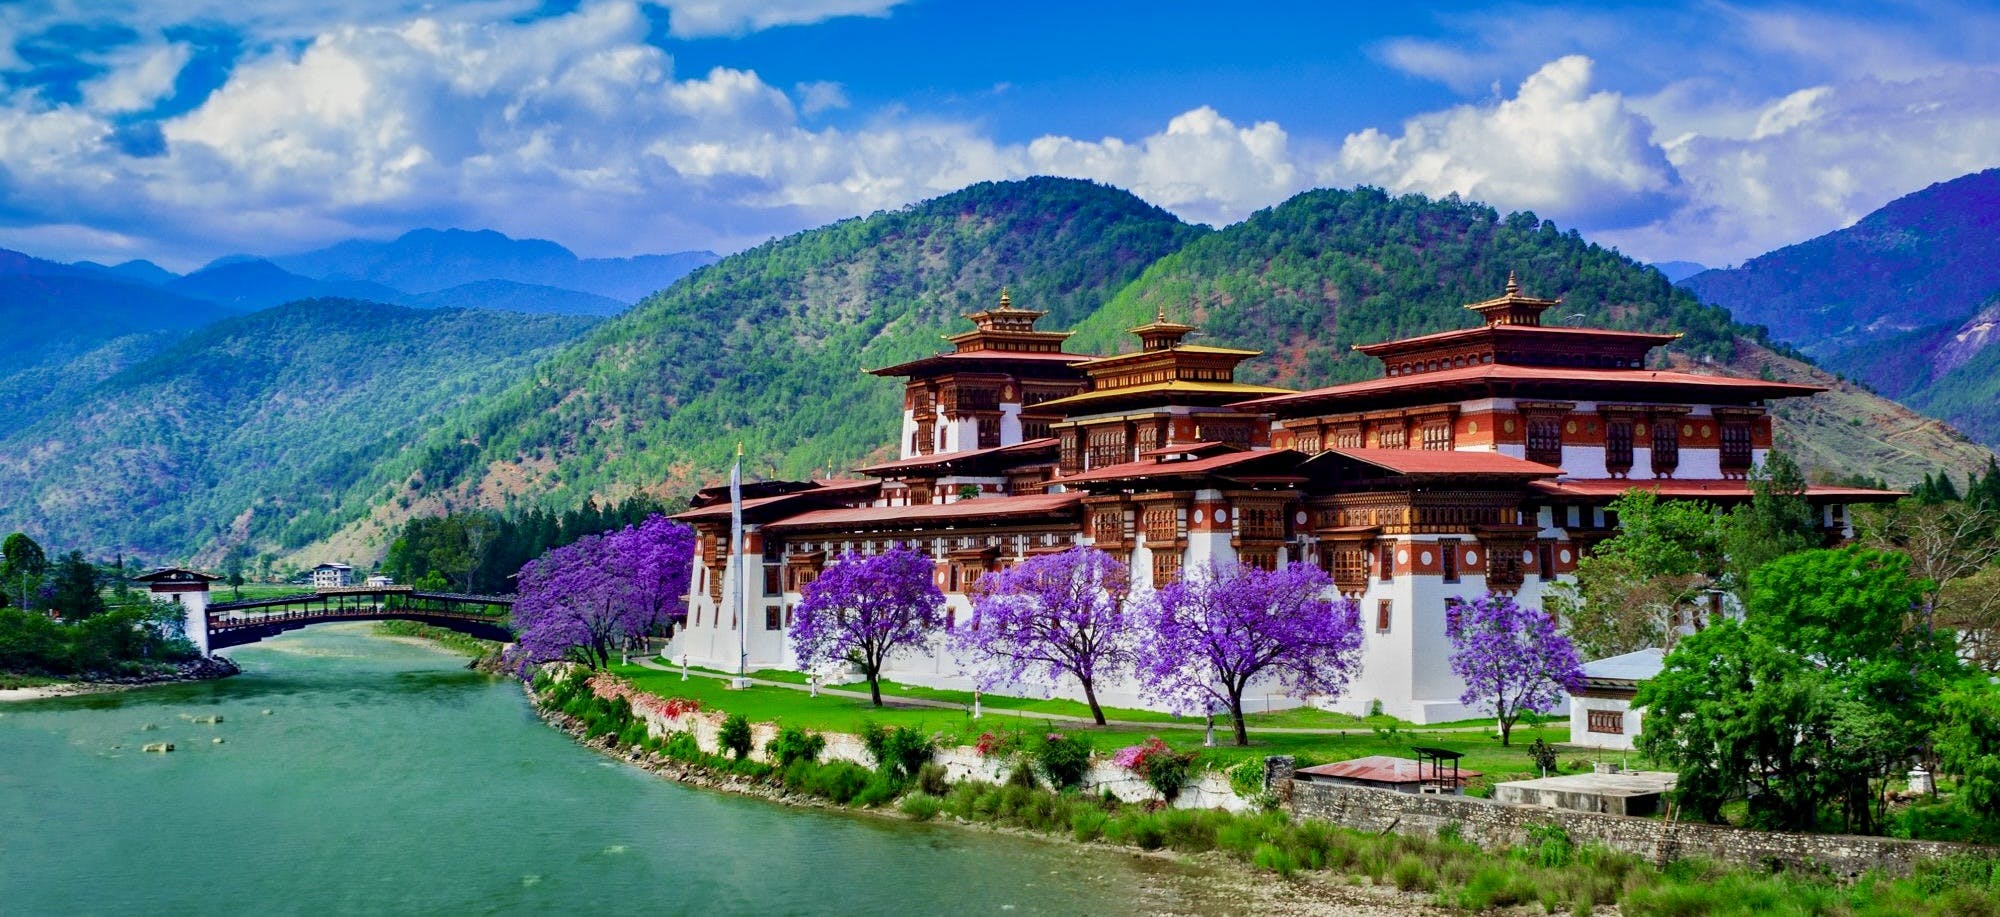 Getting Into Bhutan